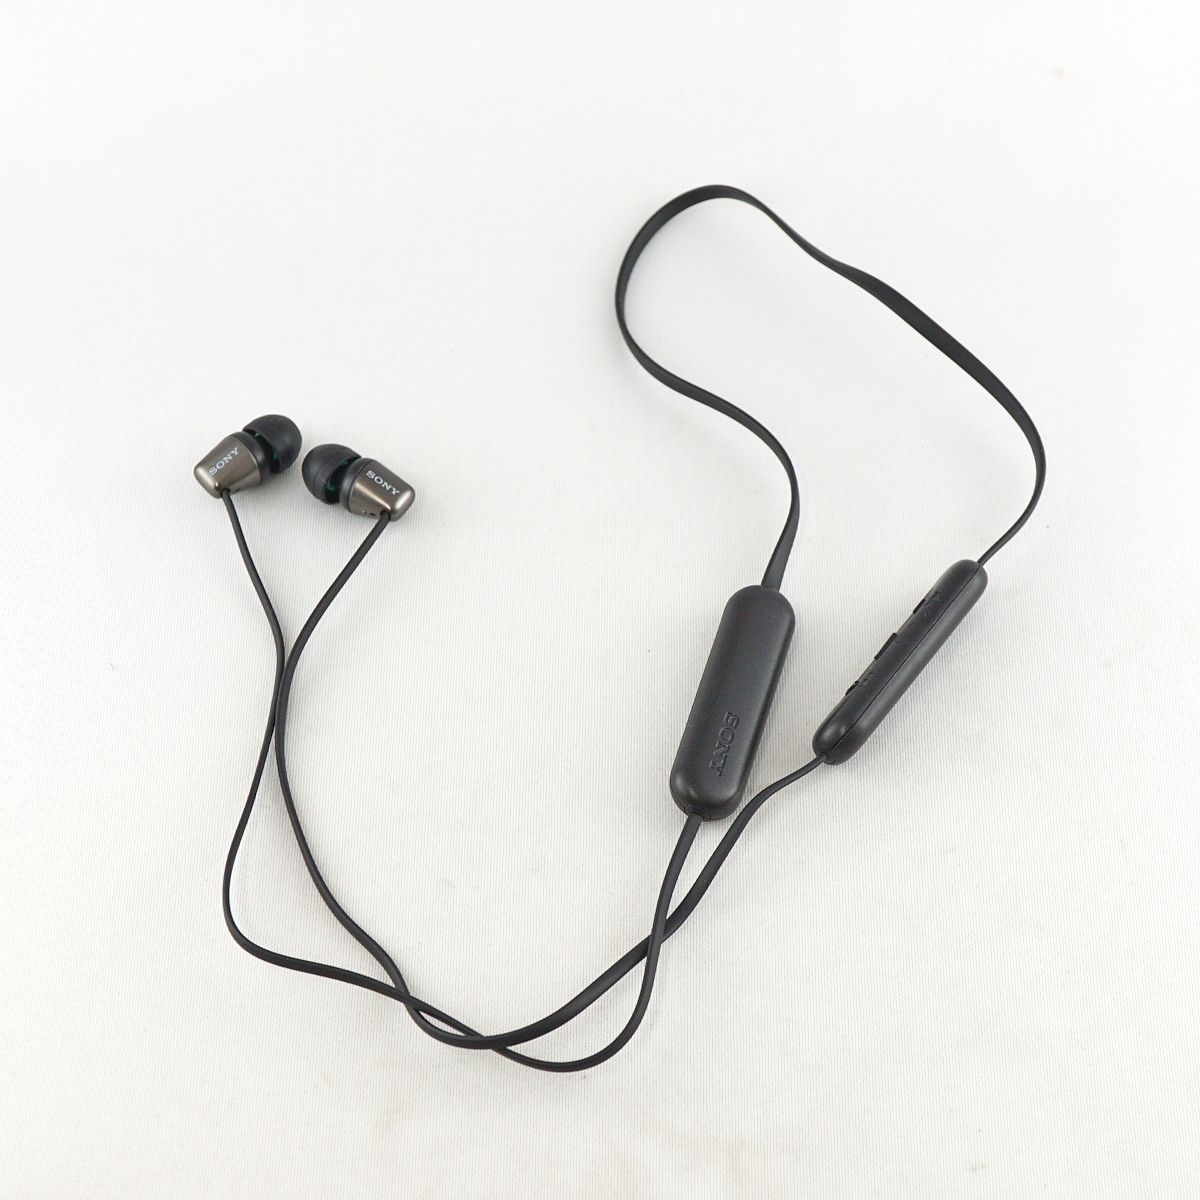 SONY WI-C310 ワイヤレスイヤホン USED品 Bluetooth ネックバンド マイク 長時間再生 高音質 ソニー ブラック 完動品 S  X4786 ウィット メルカリ